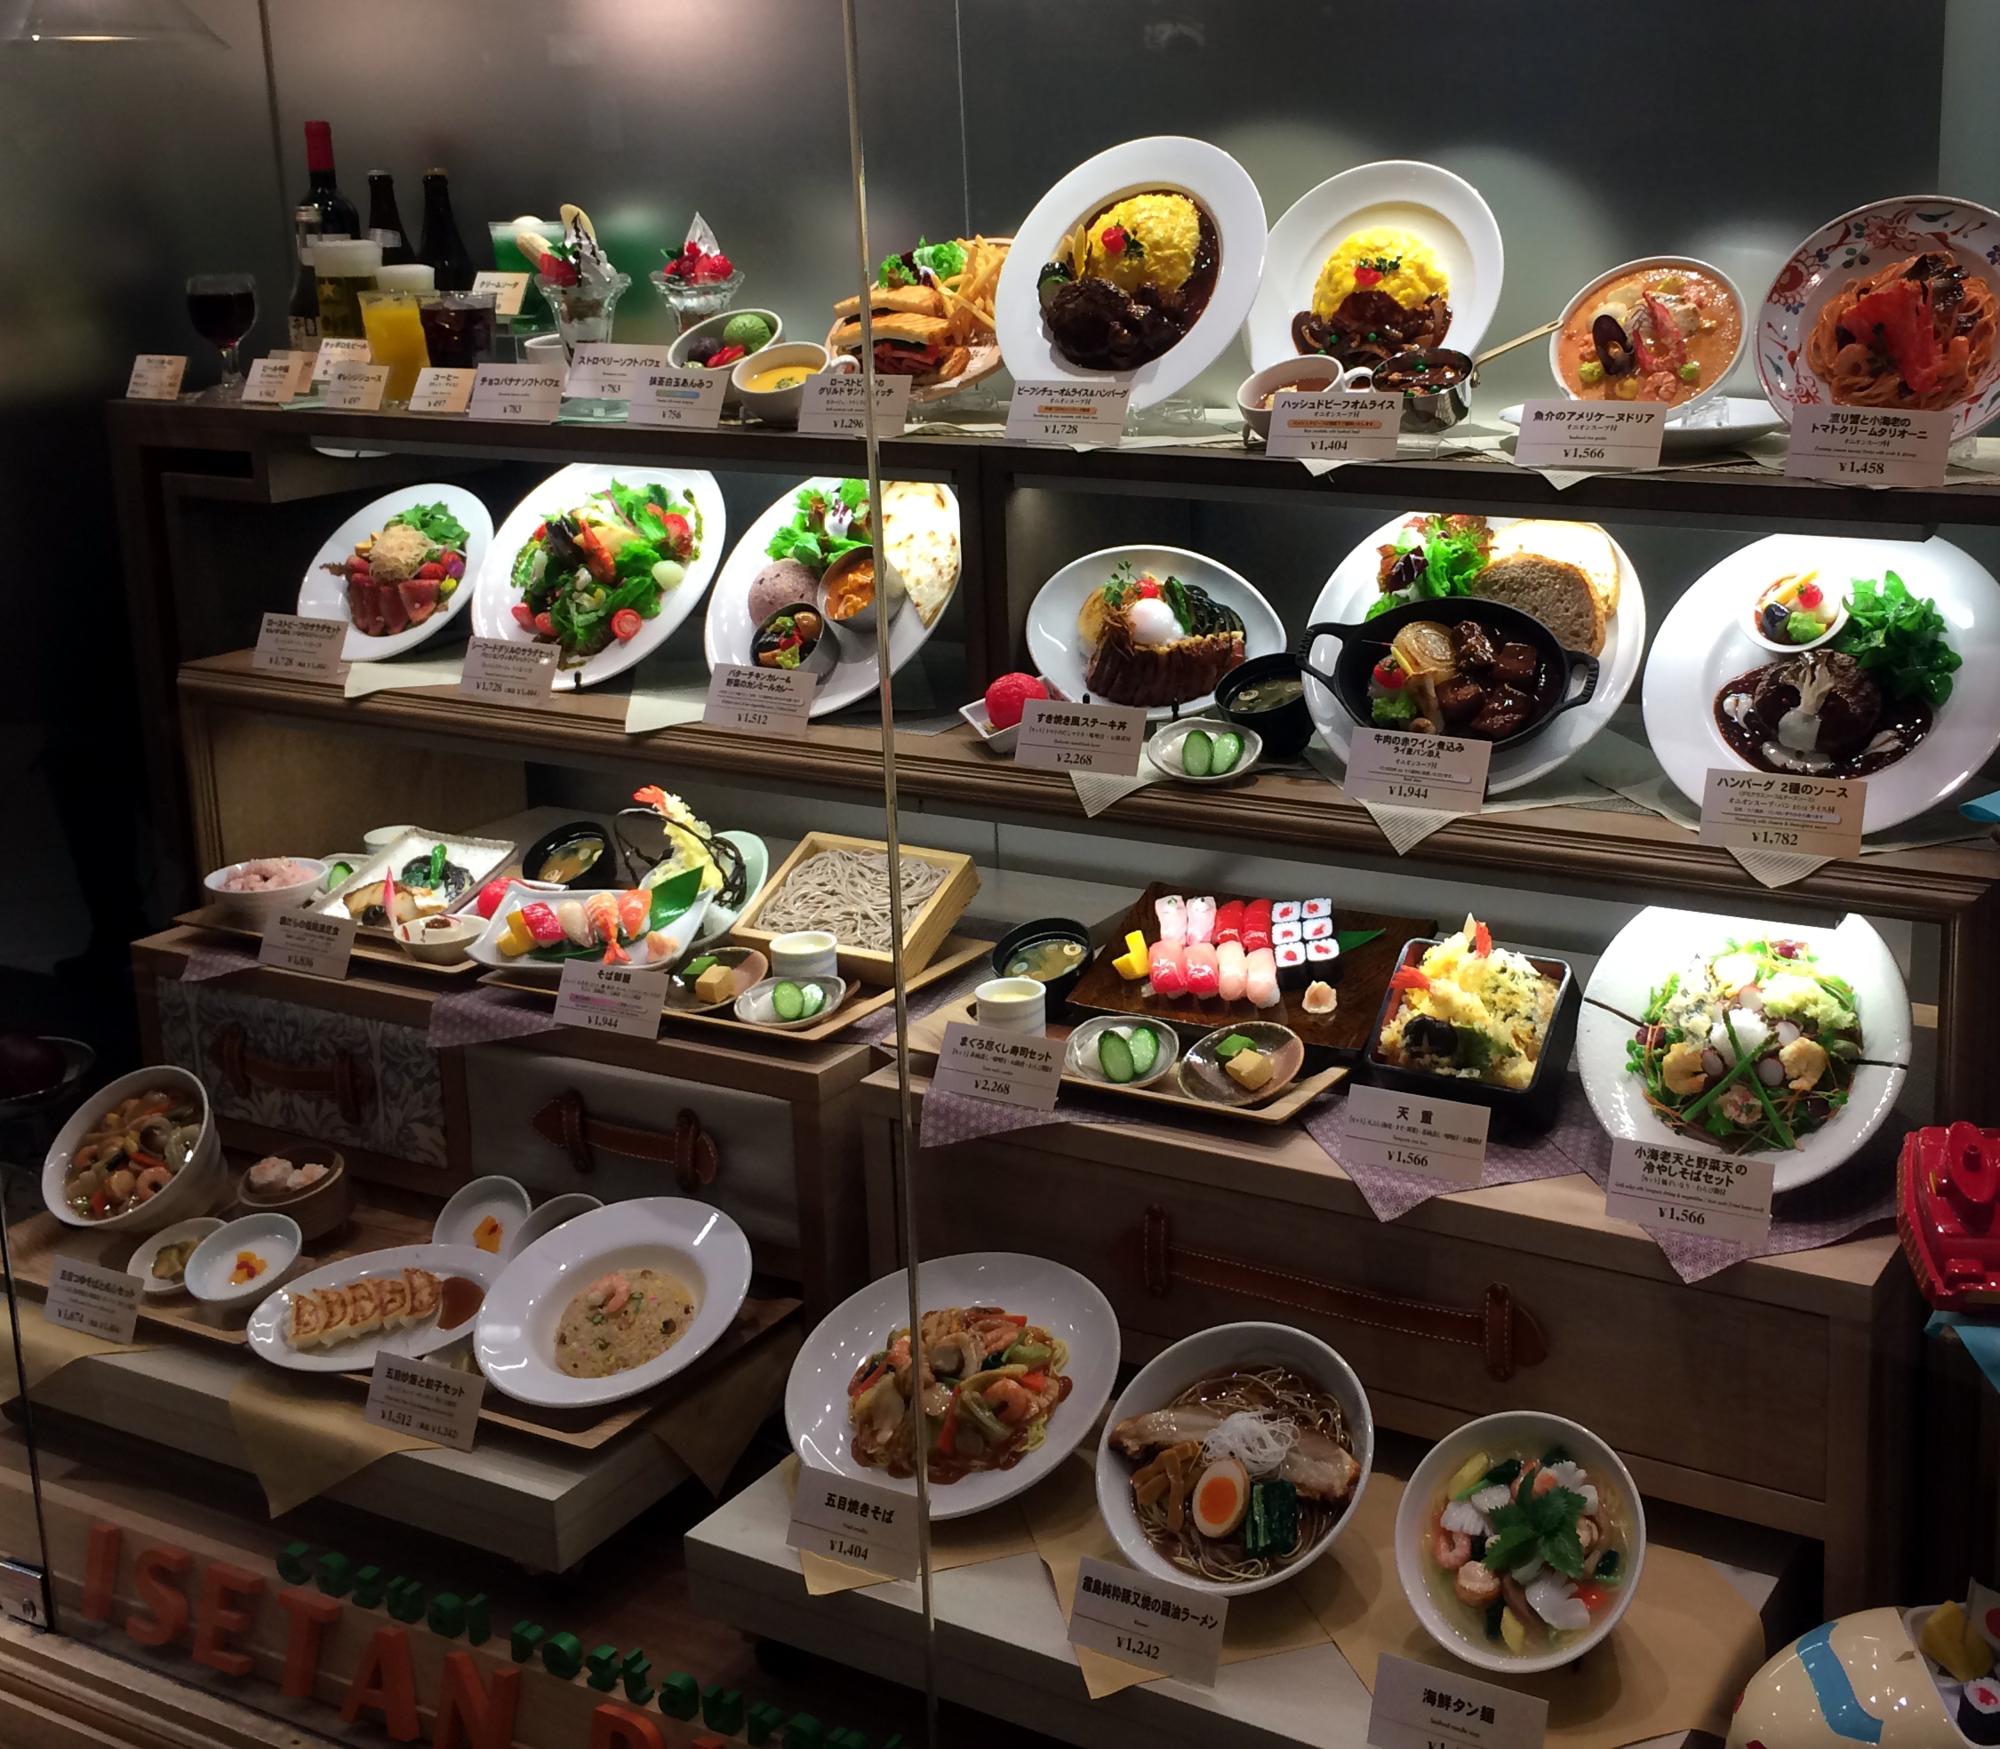 Tokyo (2015) - Food Display